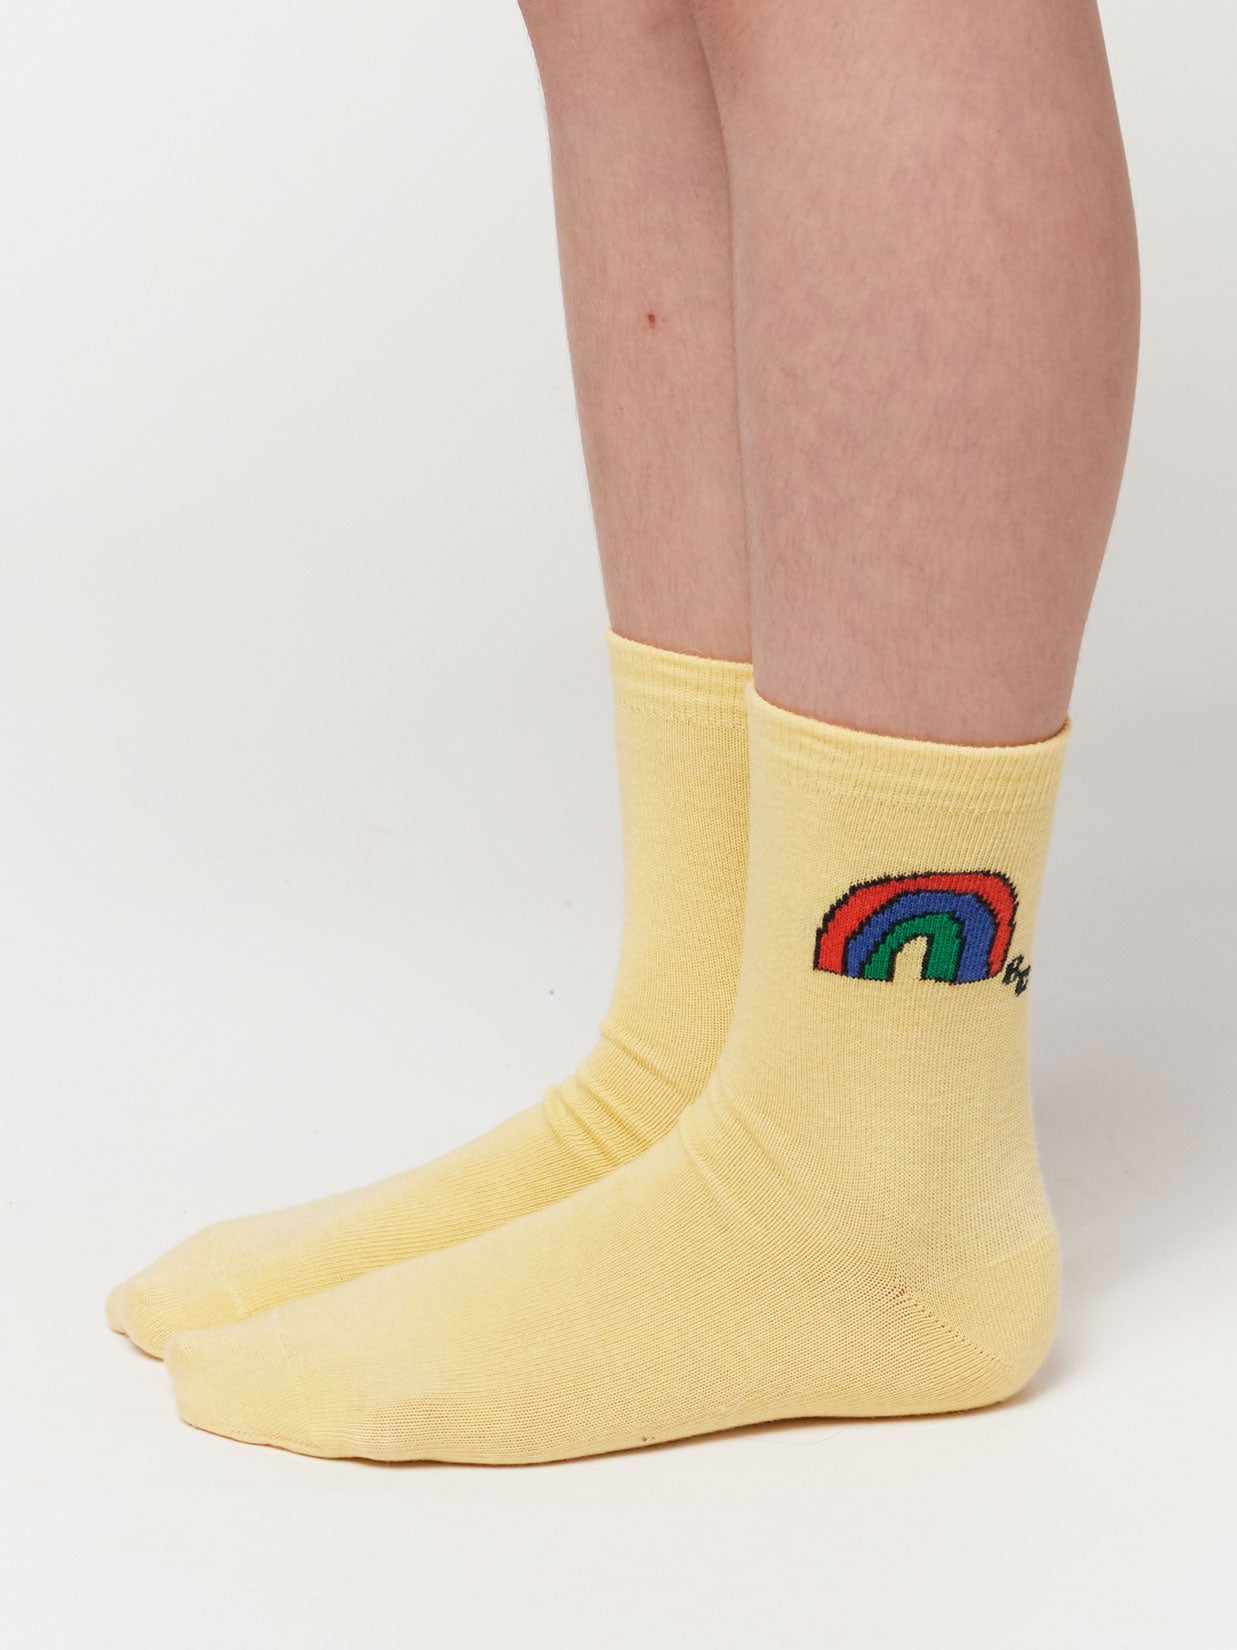 Rainbow & Ribbon Bow All Over socks pack